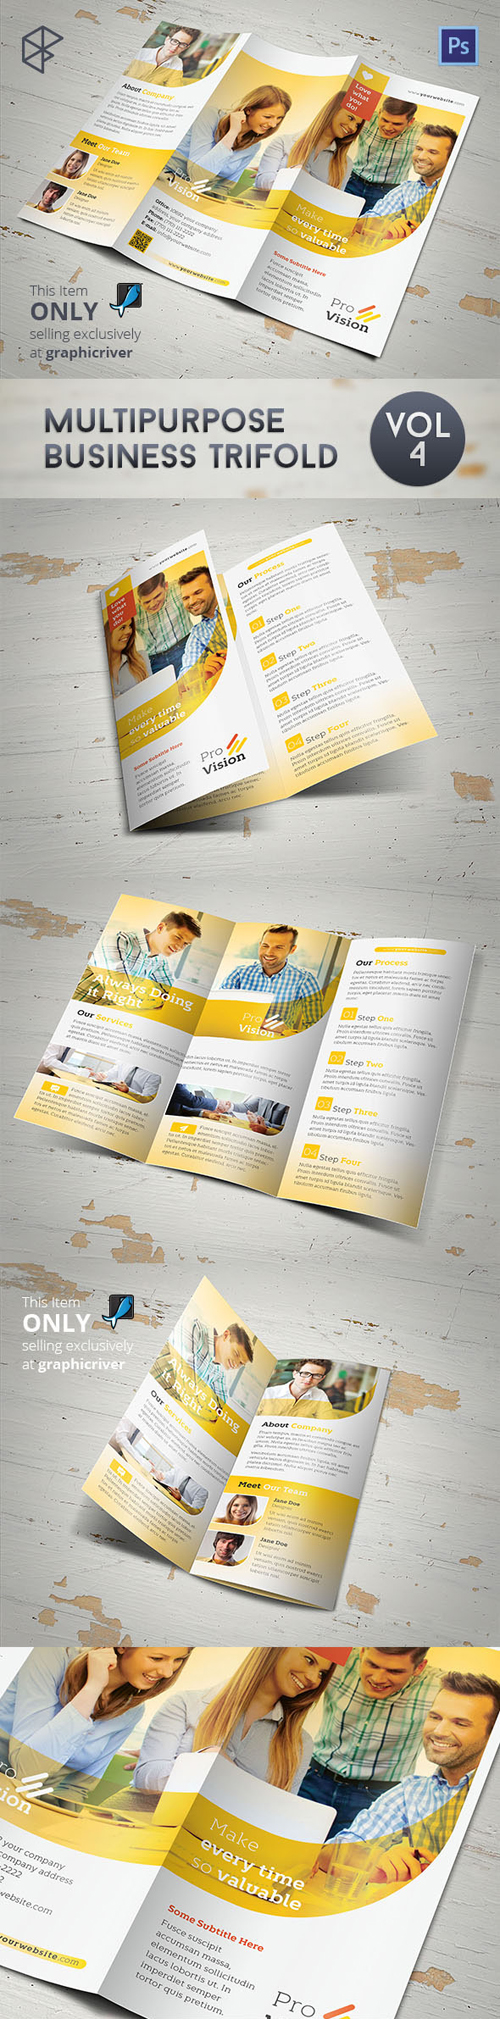 Multipurpose Business Trifold Brochure Design